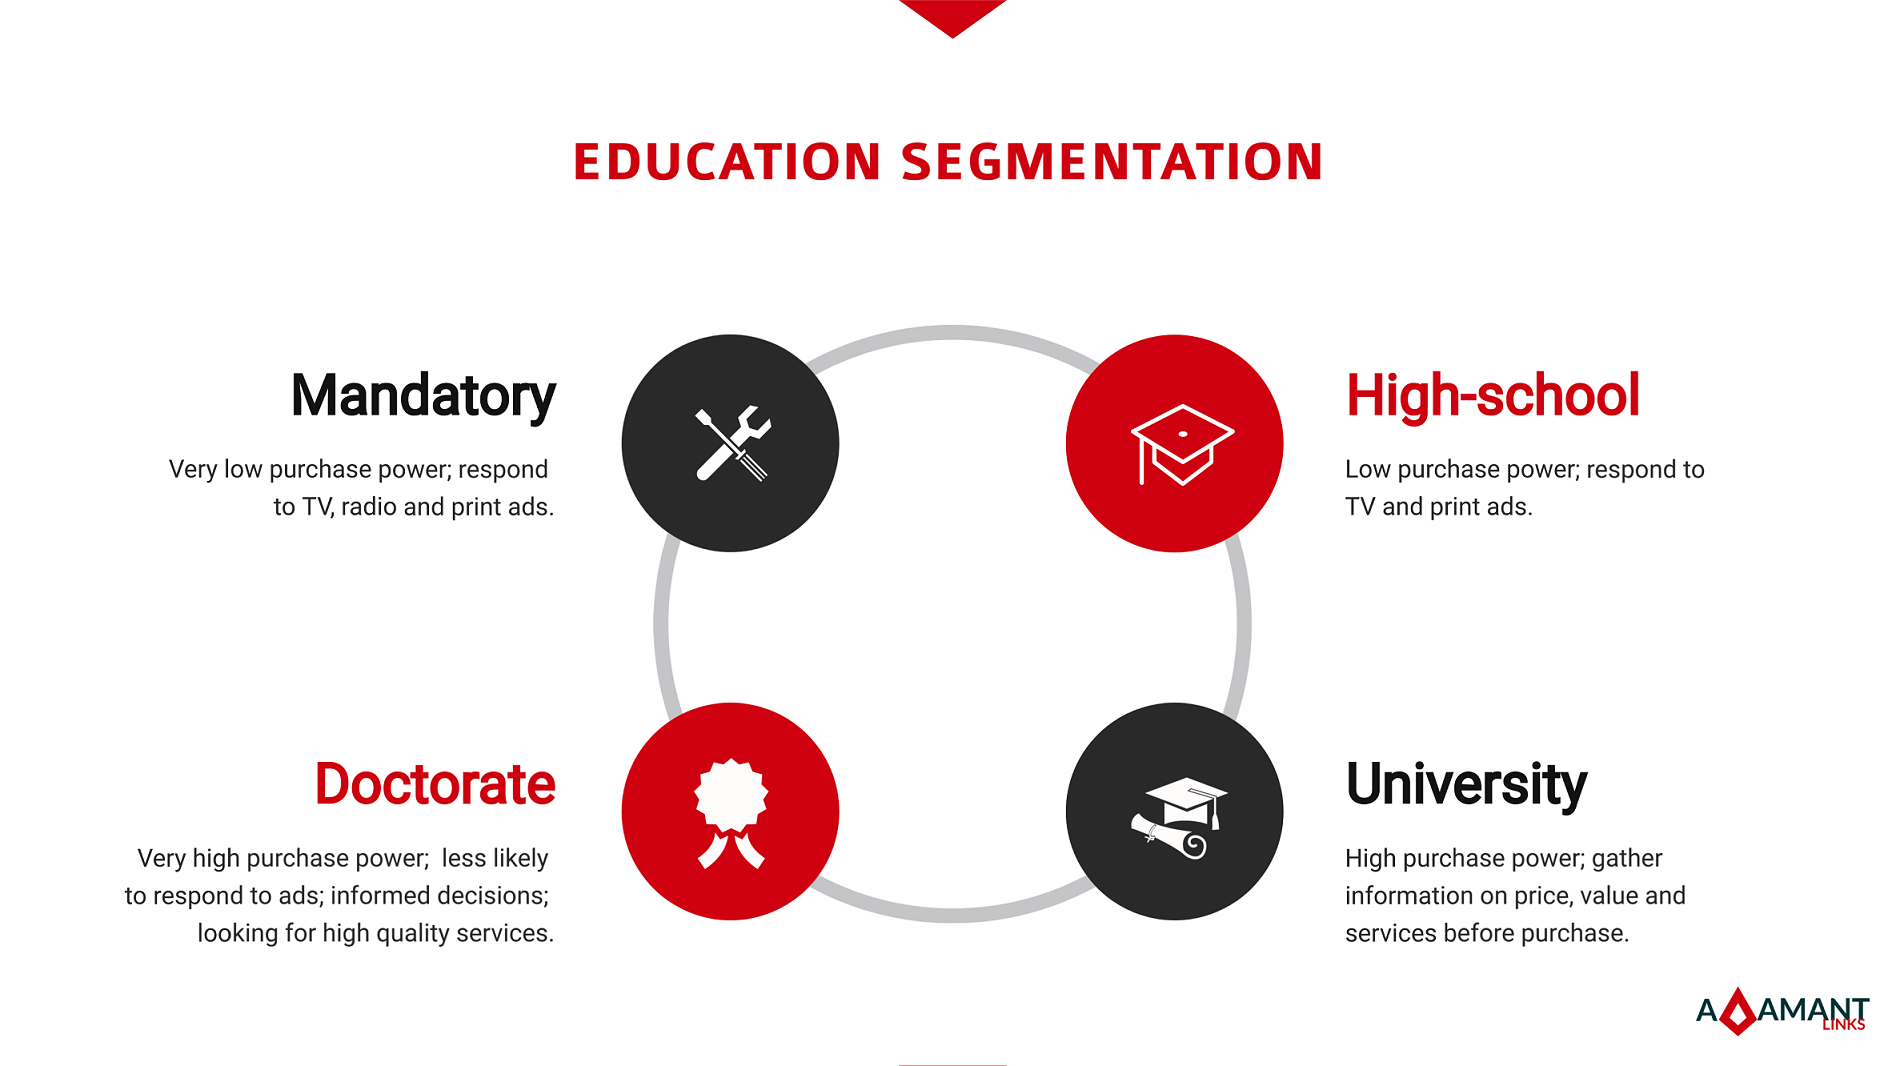 Adamant Links - Education Segmentation